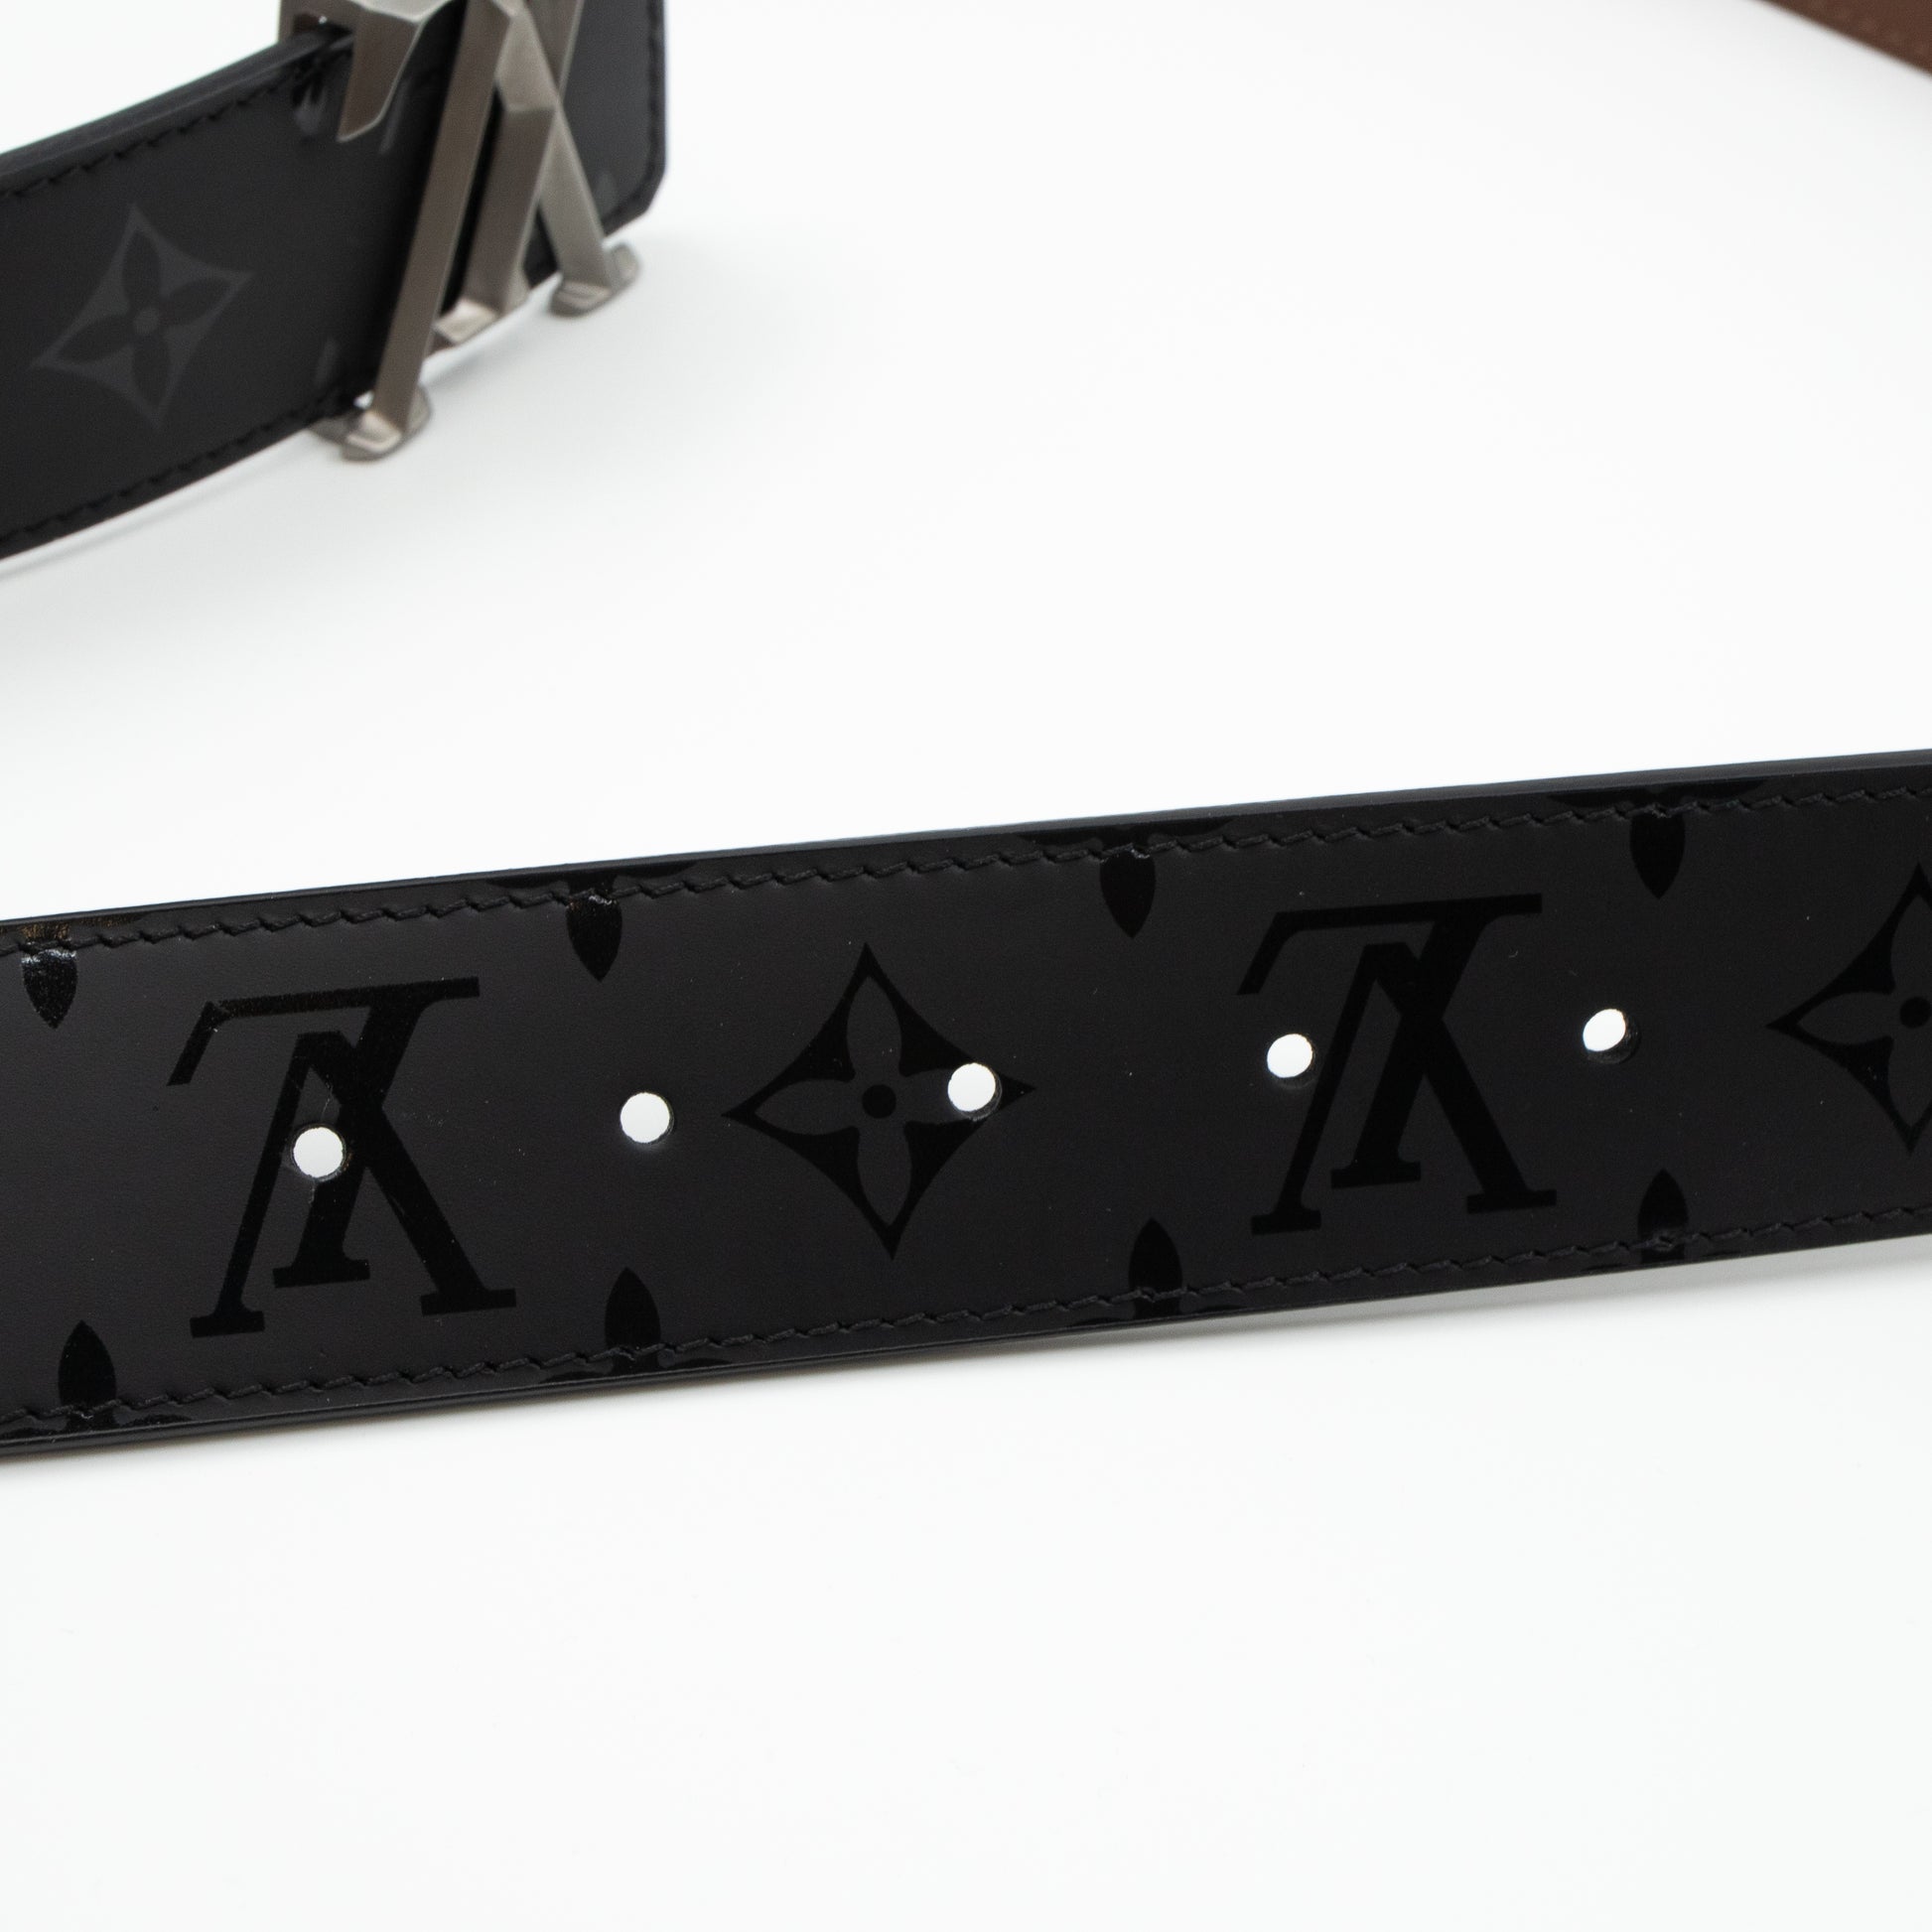 Louis Vuitton Pyramide 40mm Reversible Belt Monogram Illusion Black/Brown  Sz 110